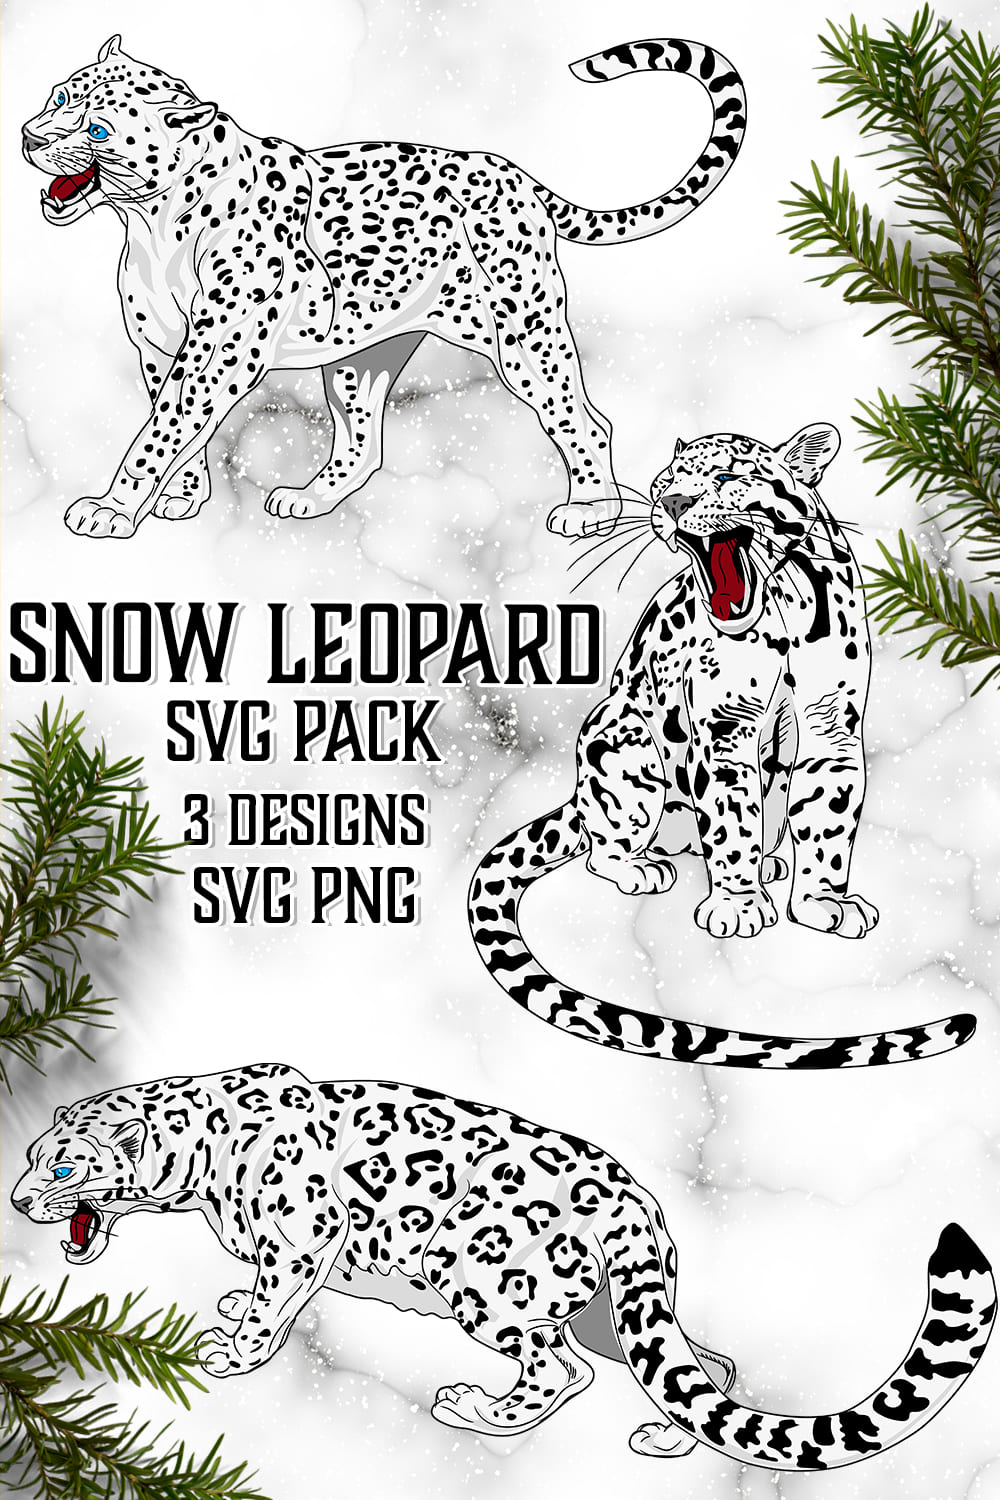 Snow Leopard Svg - Pinterest.